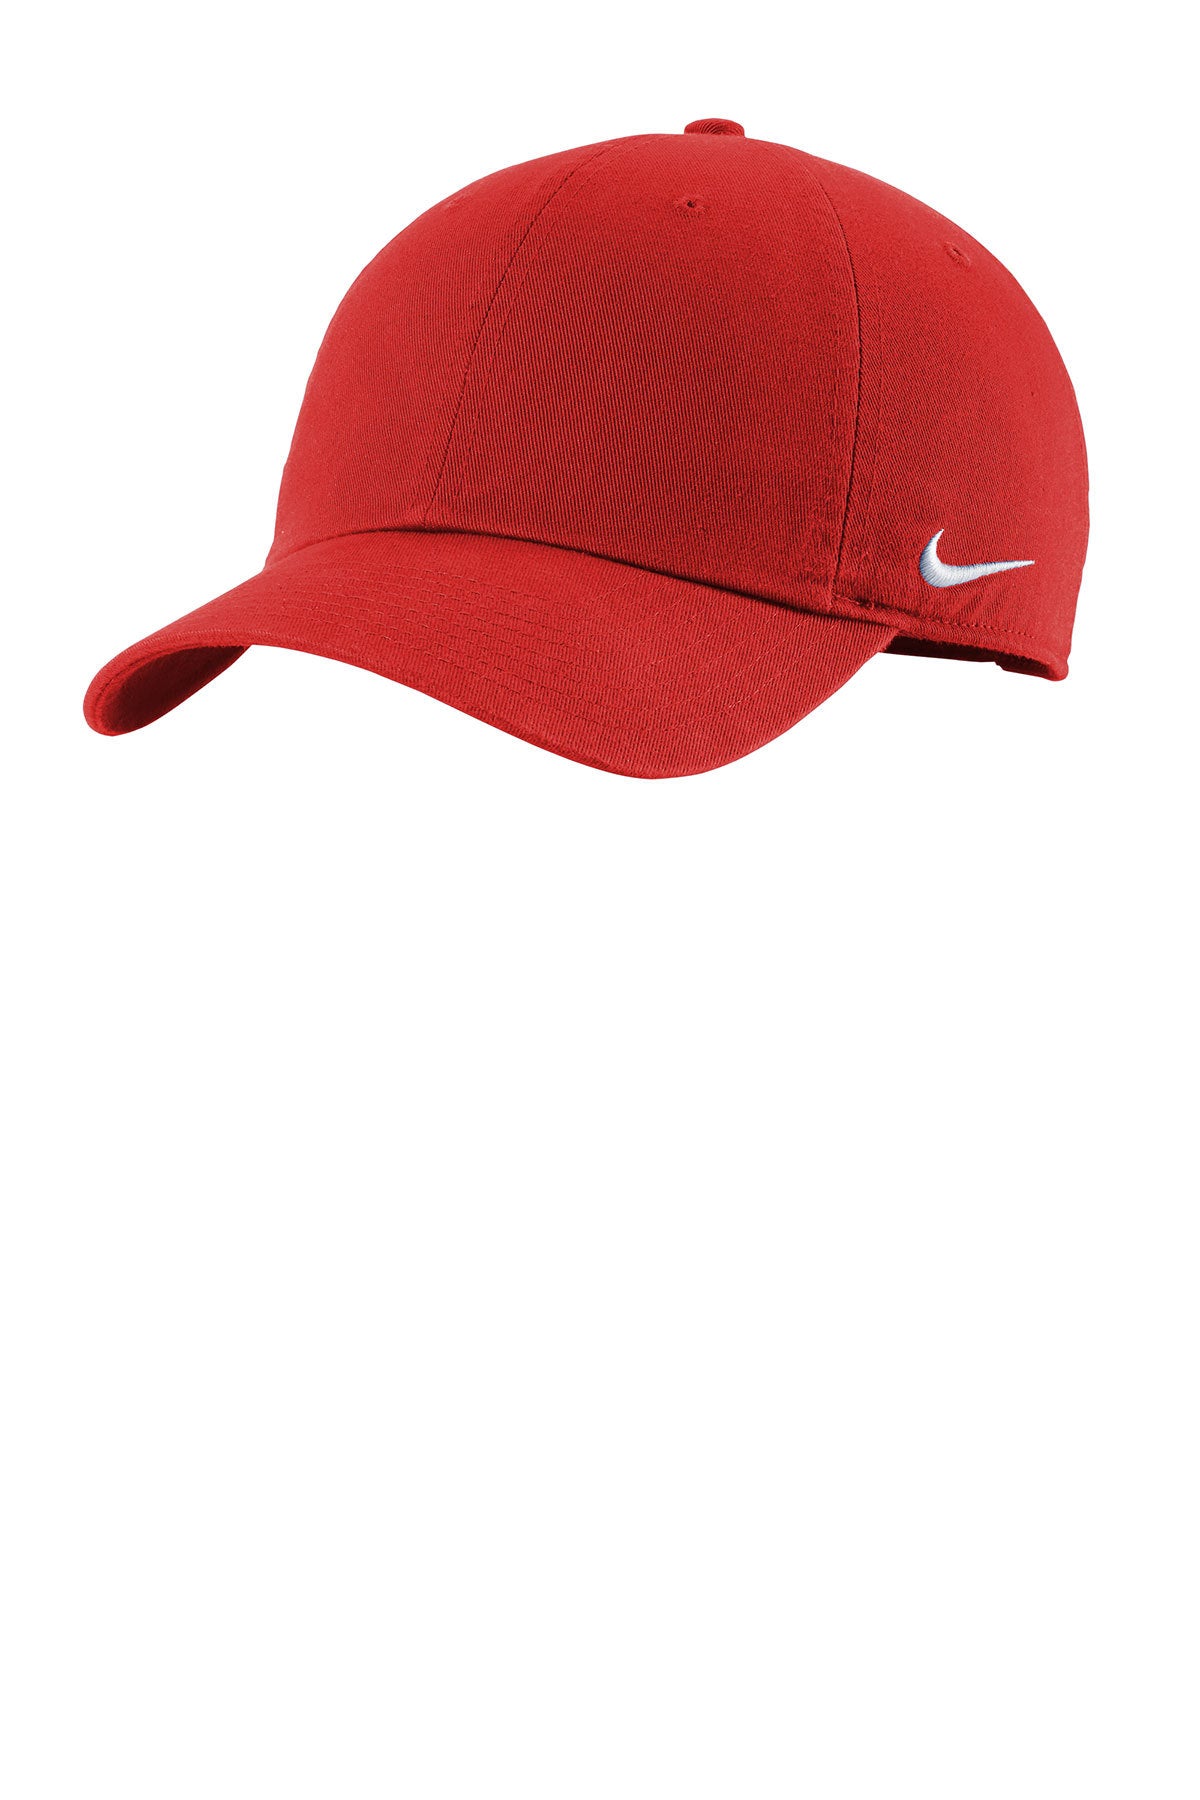 IAABO Nike Heritage 86 Cap *Embroidered*